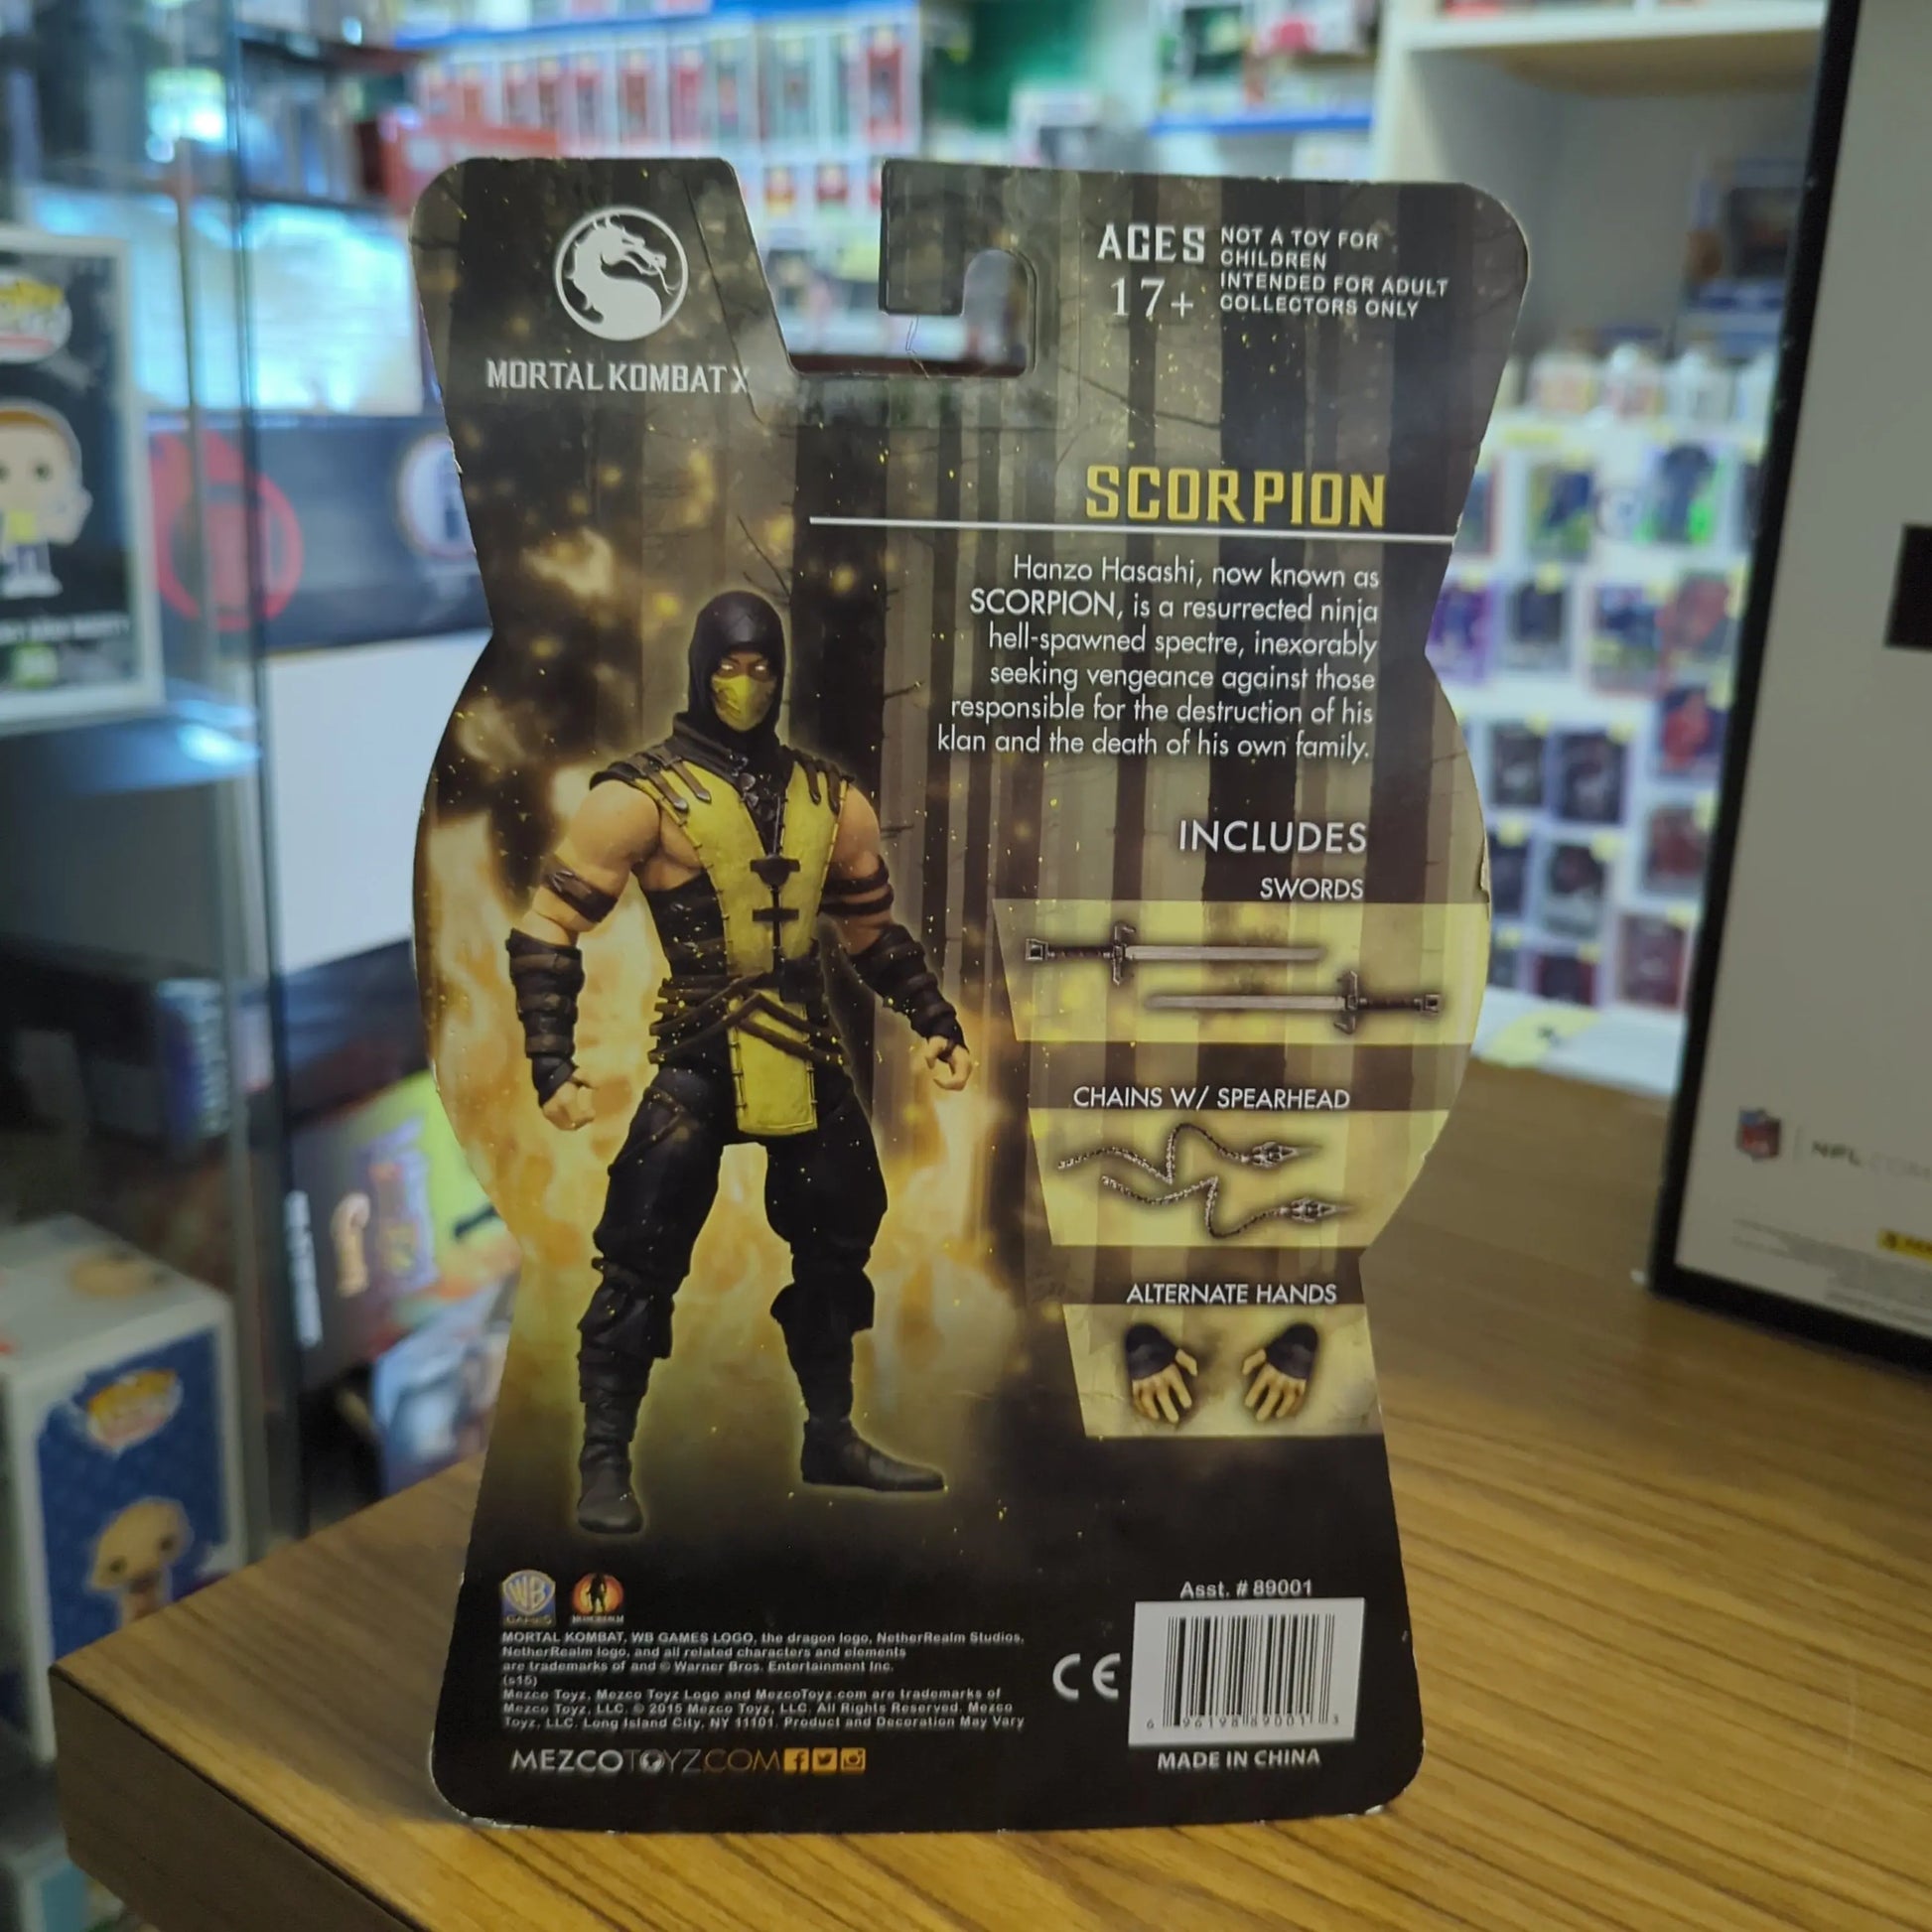 Mezco Toyz Mortal Kombat X: Scorpion 6" inch figure. FRENLY BRICKS - Open 7 Days